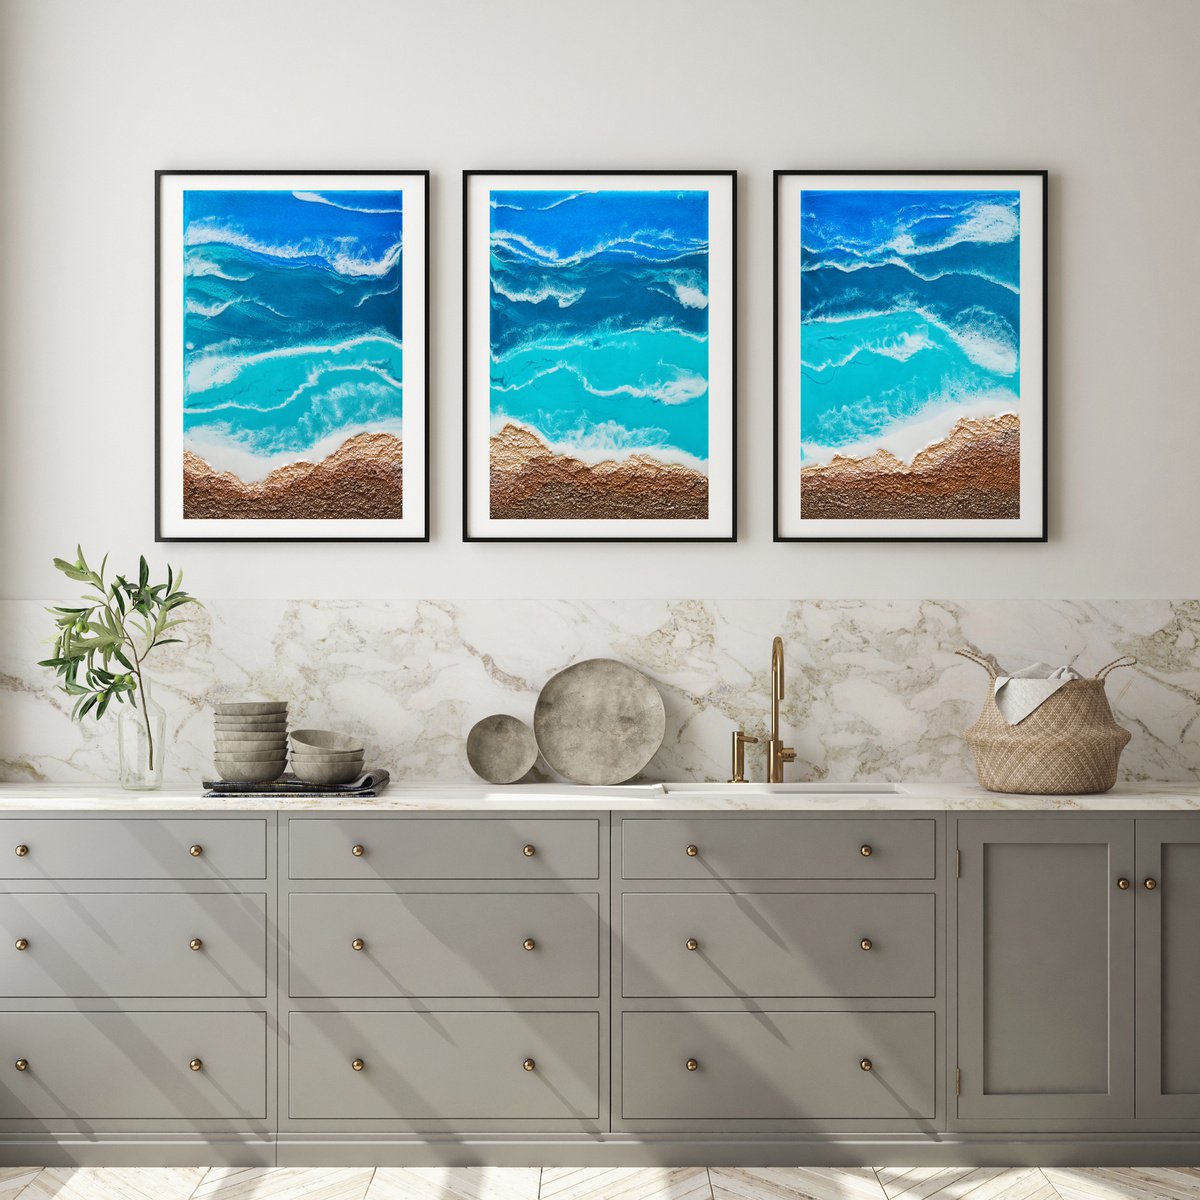 Marine volumetric triptych - set of 3 original seascape artwork by Delnara El